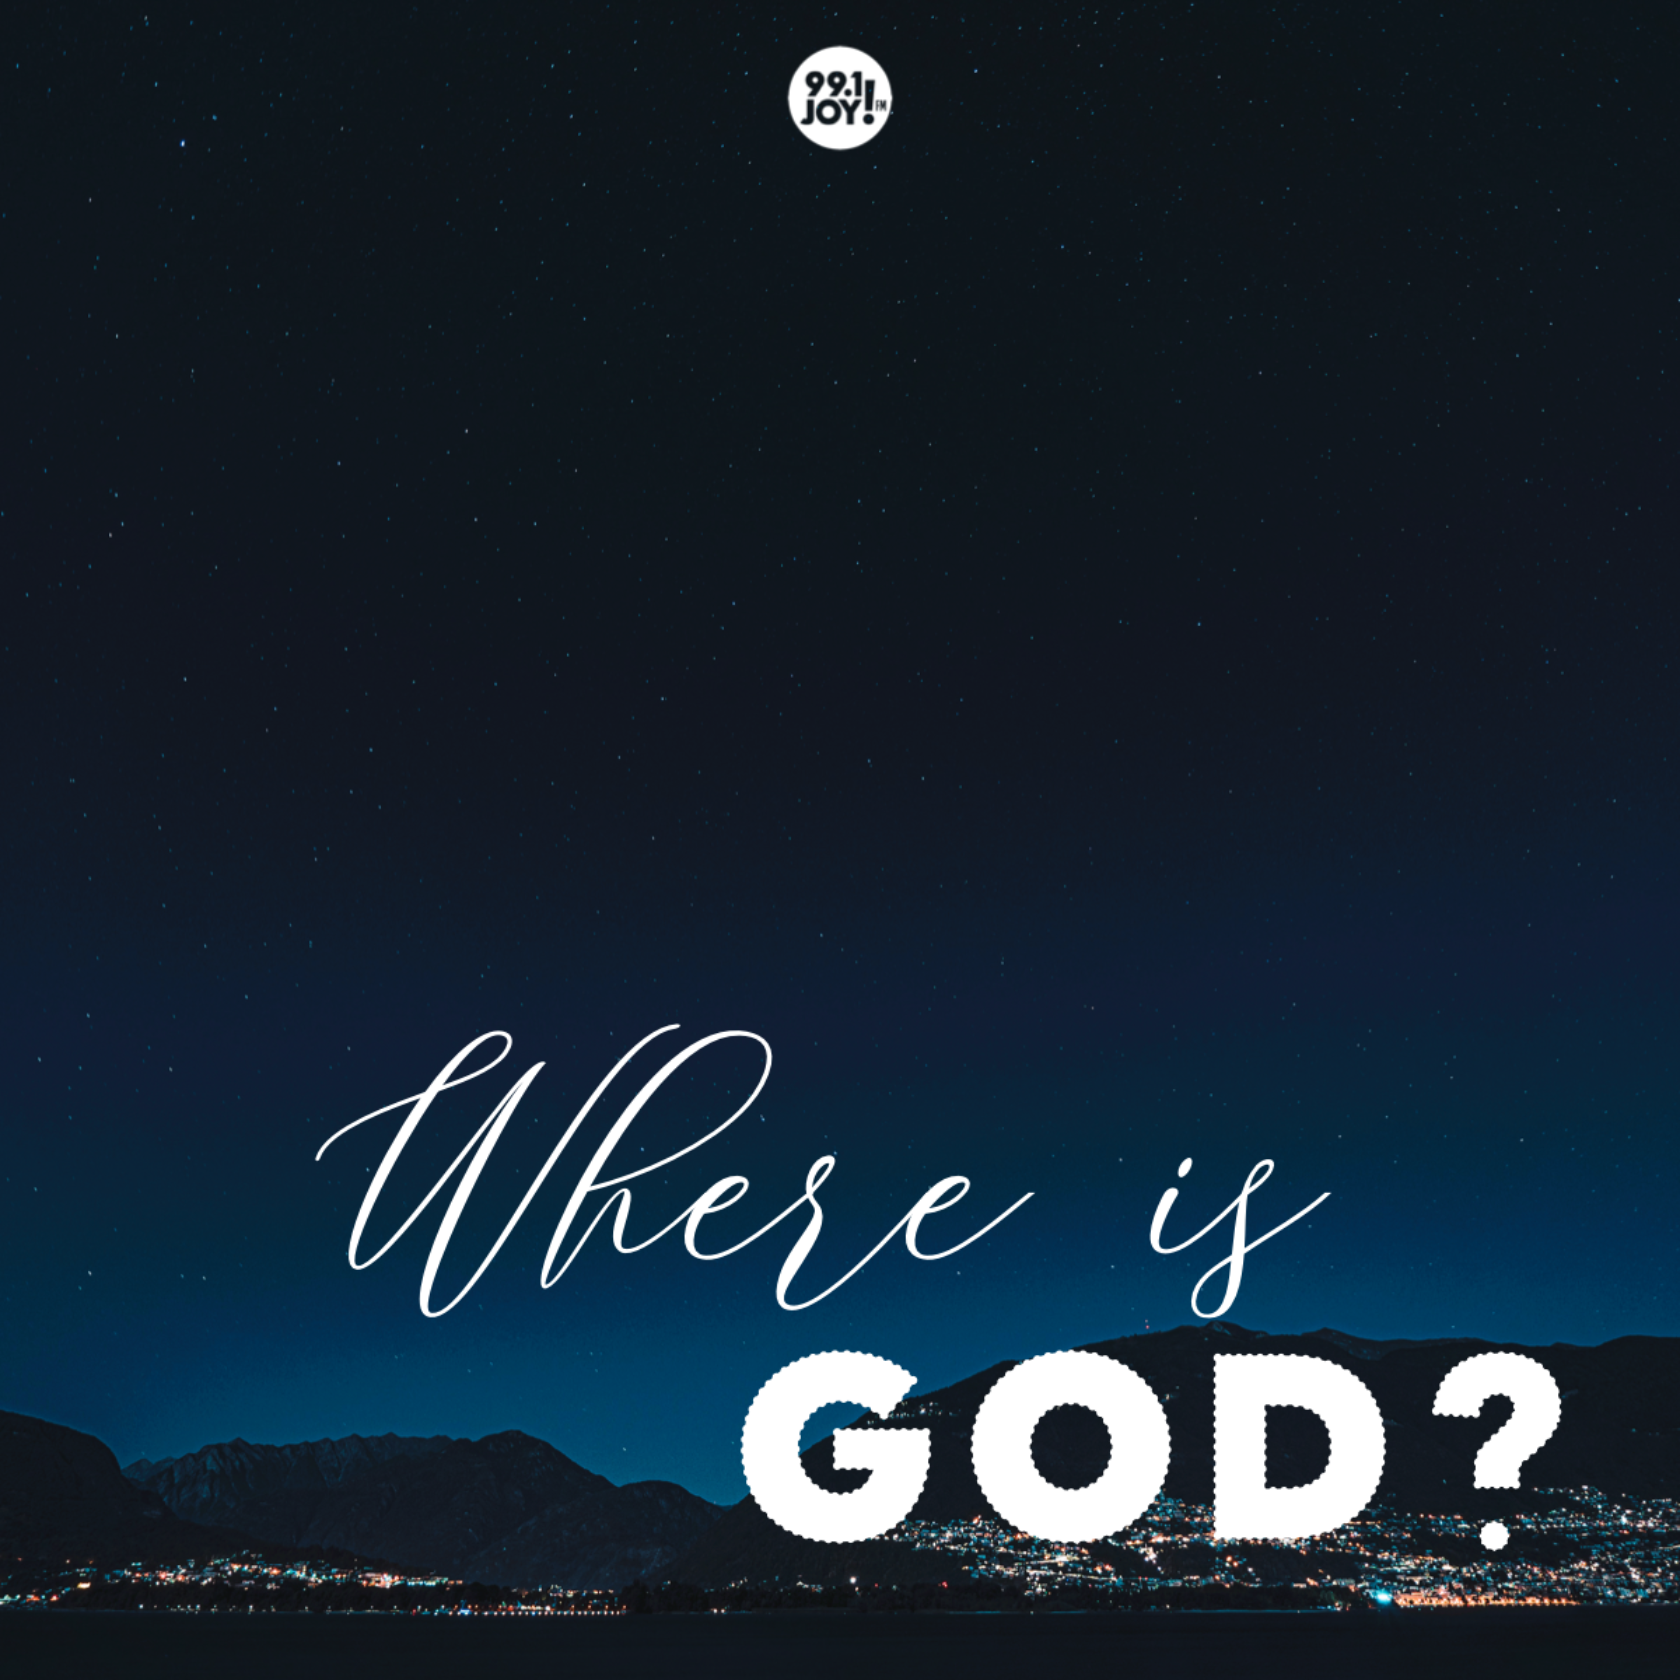 Where Is God?